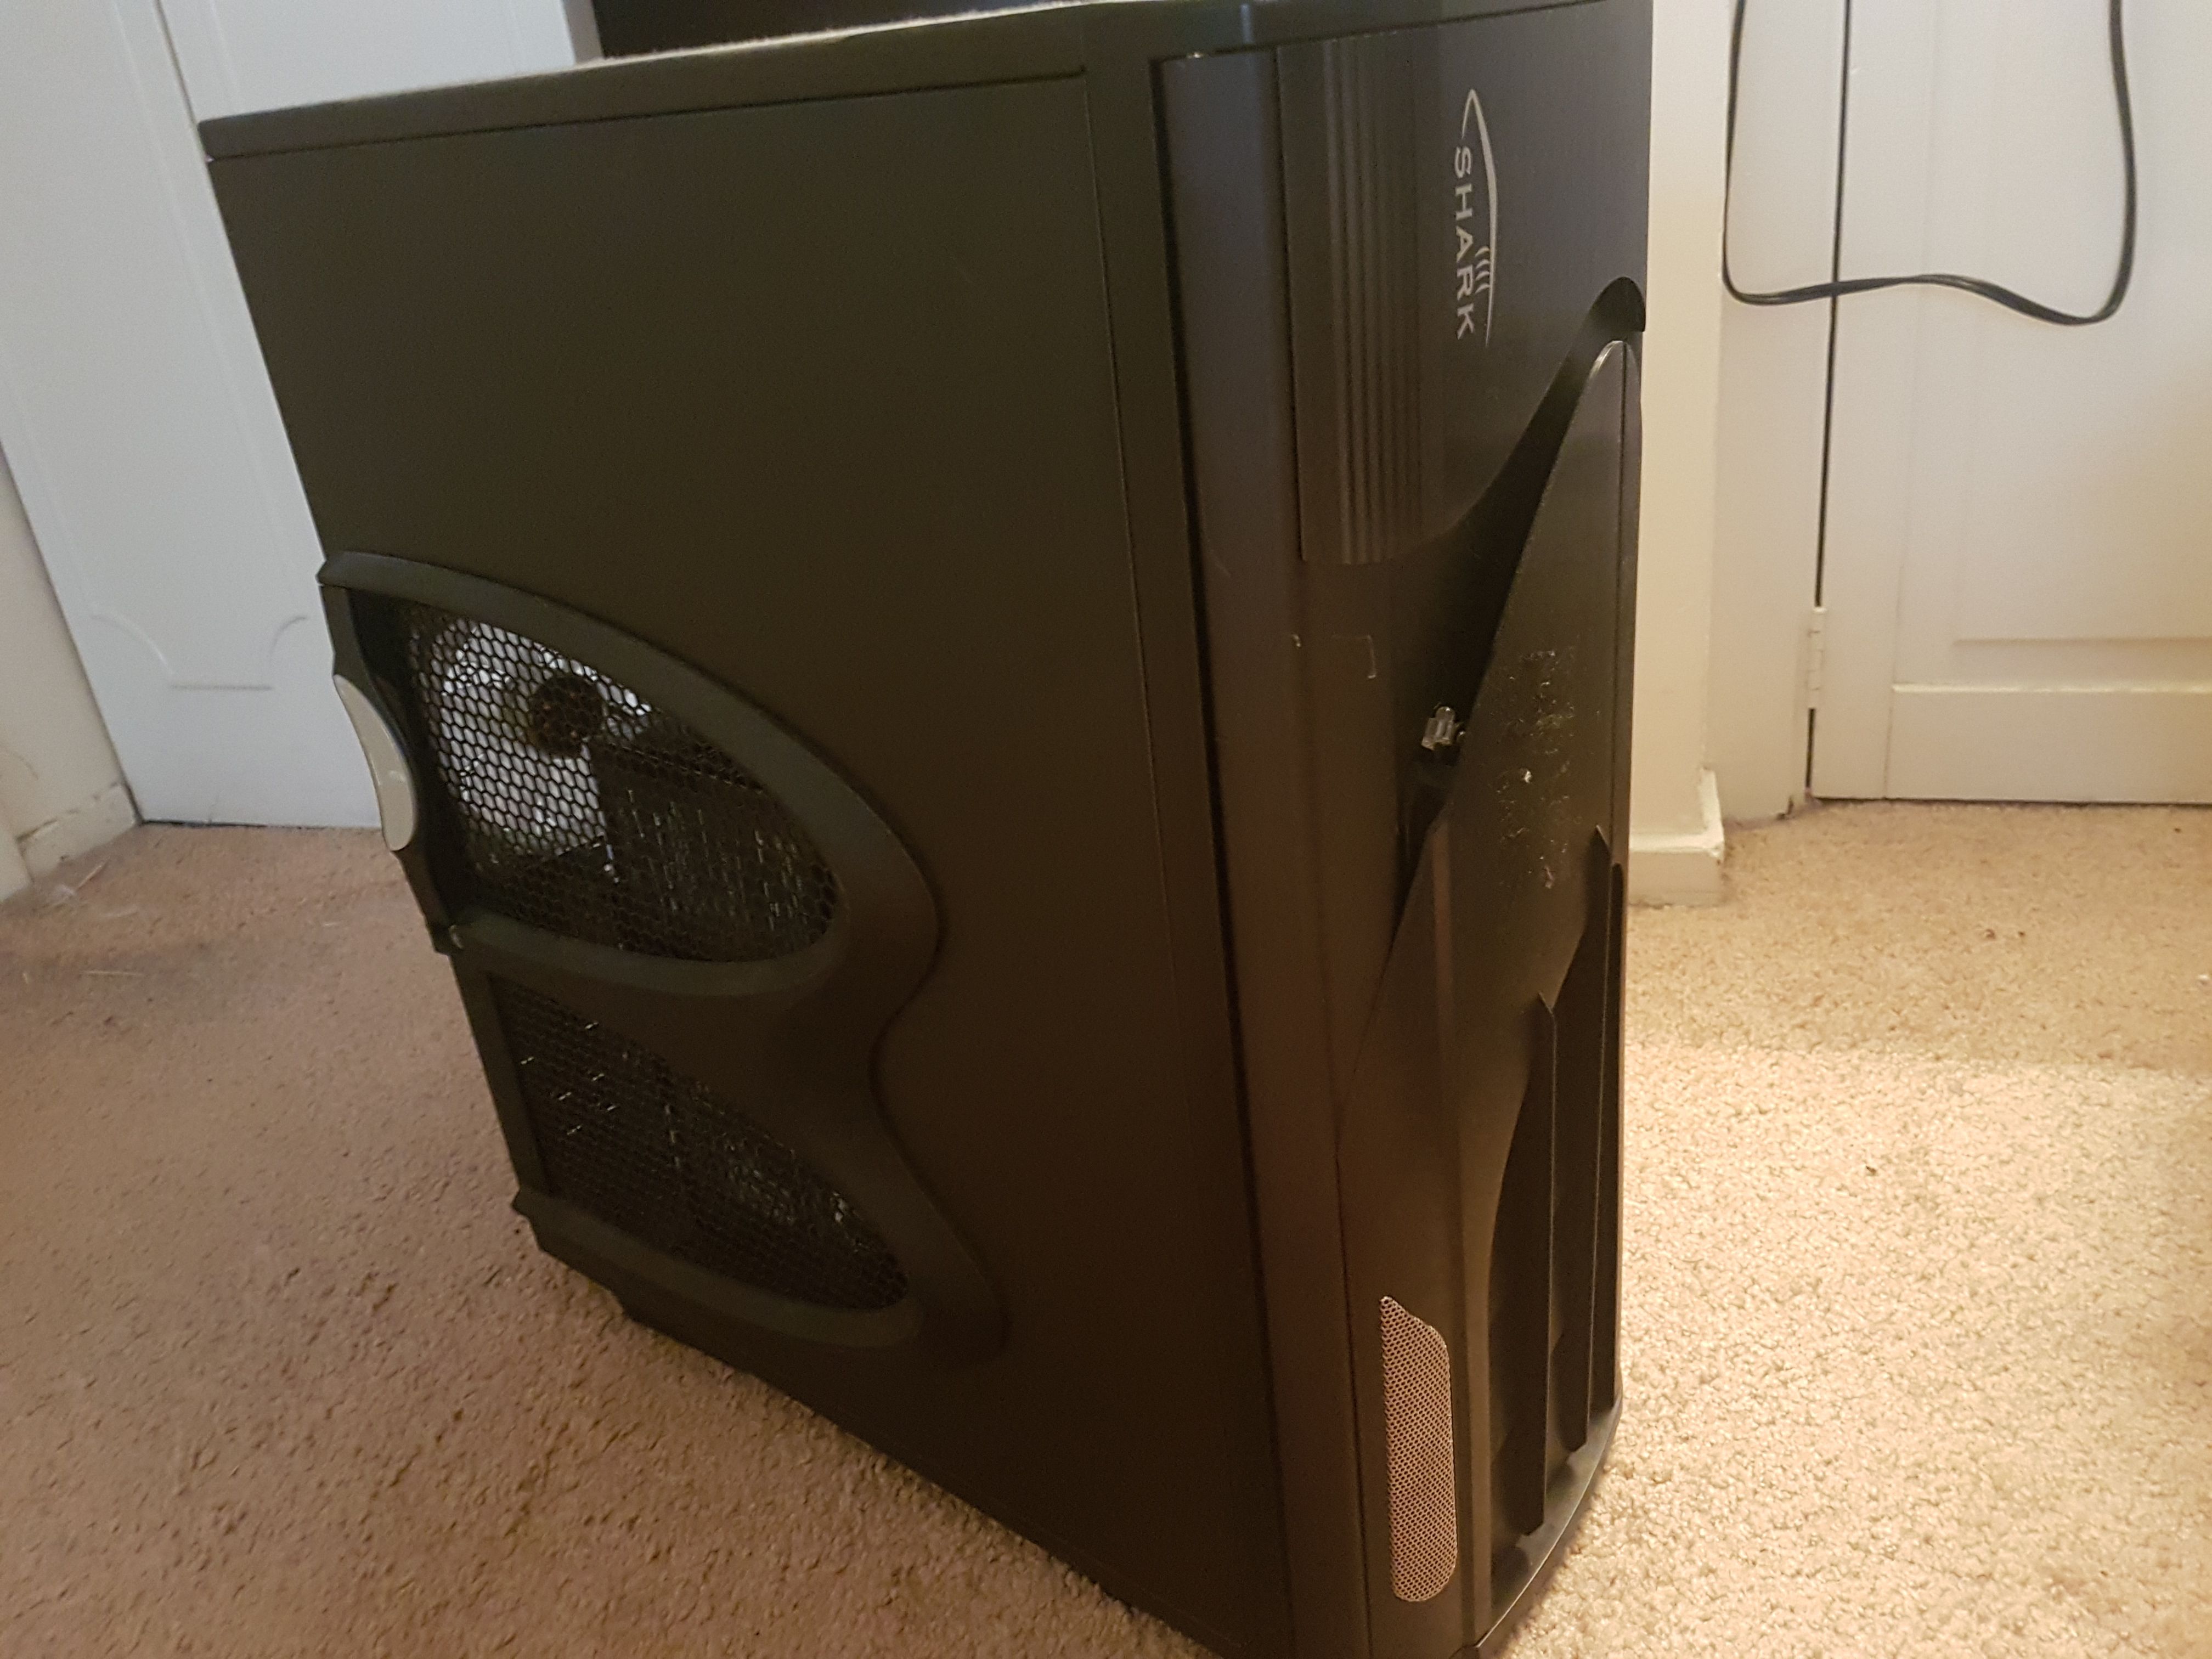 Big beautiful "Shark" PC case